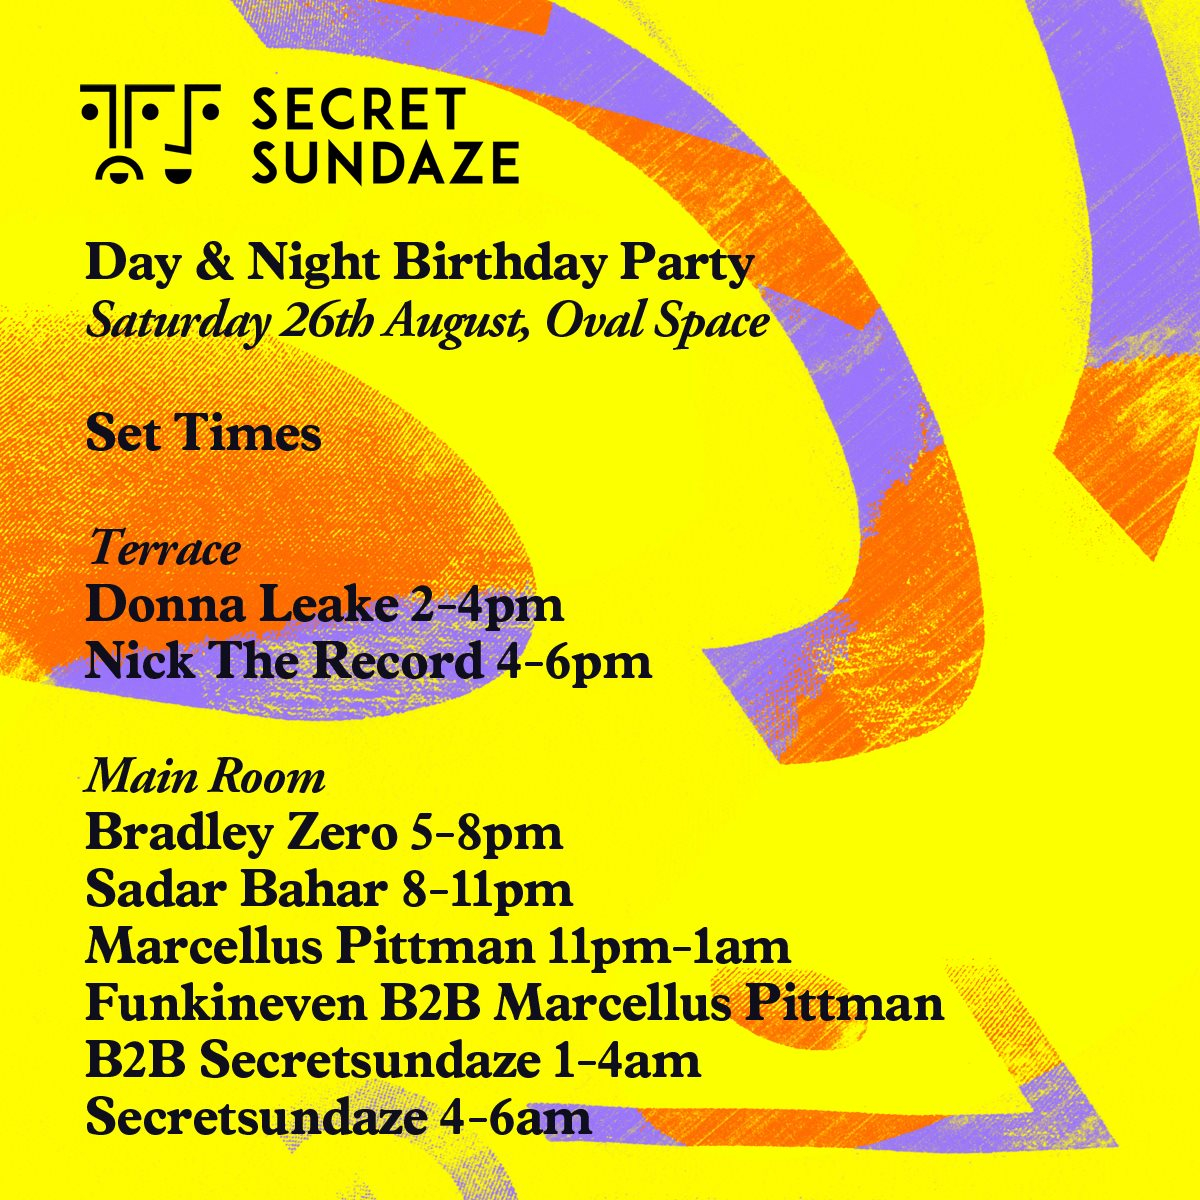 Secretsundaze Day & Night Birthday Party with Marcellus Pittman, Sadar Bahar & More - Flyer back